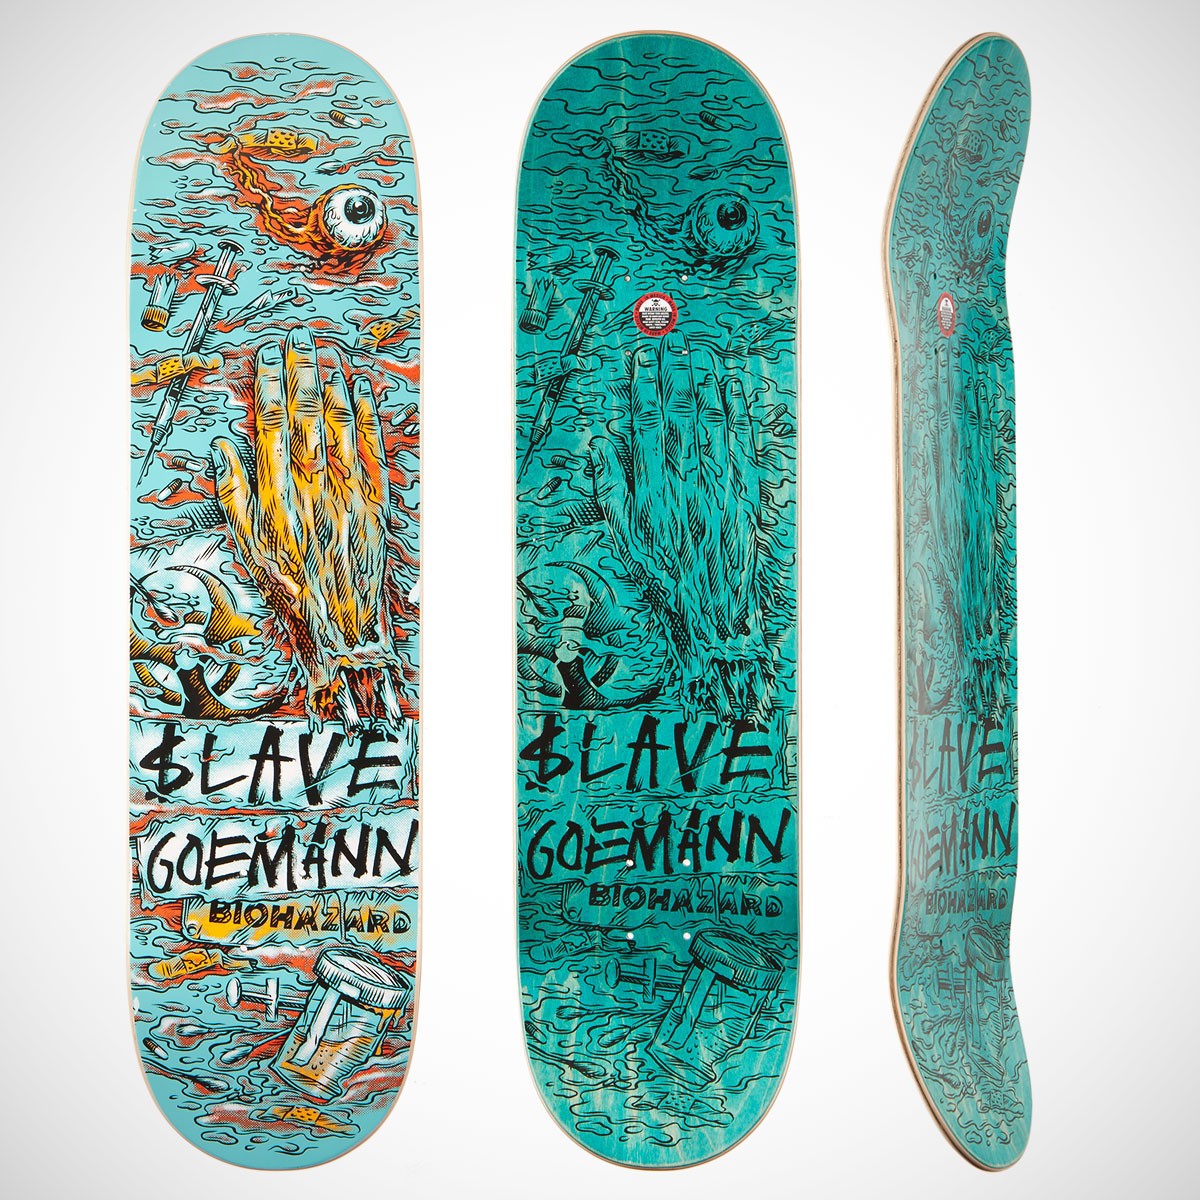 “Joe Goemann Wasted” skateboard deck by Ben Horton for Slave